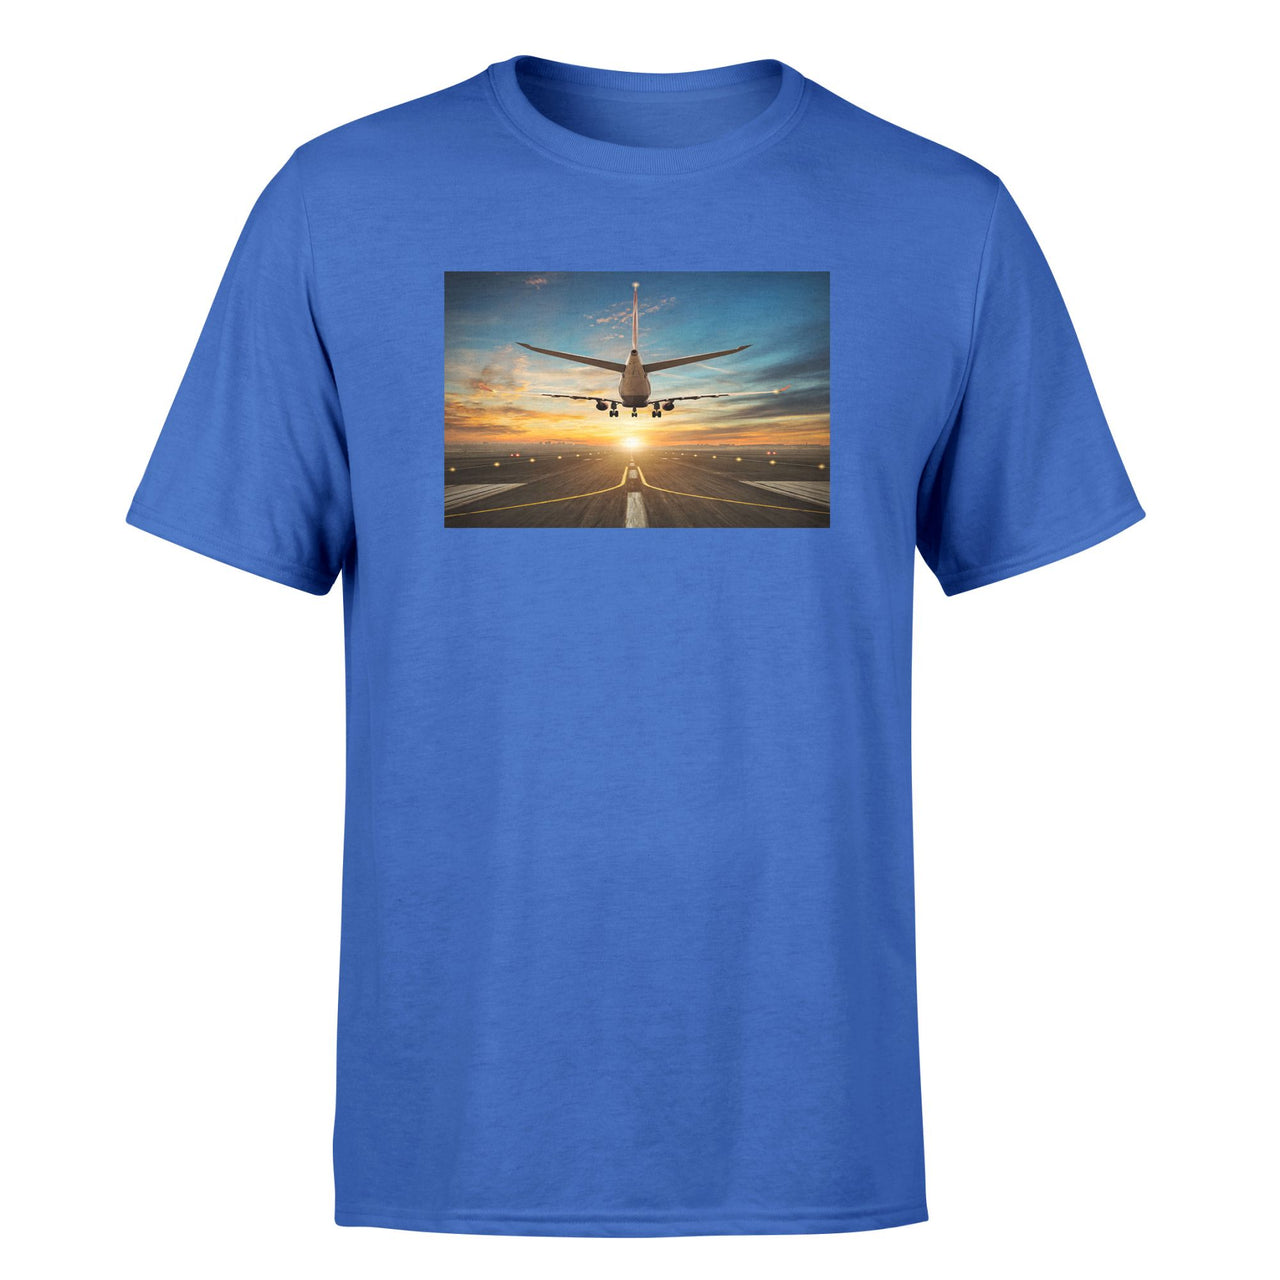 Airplane over Runway Towards the Sunrise Designed T-Shirts